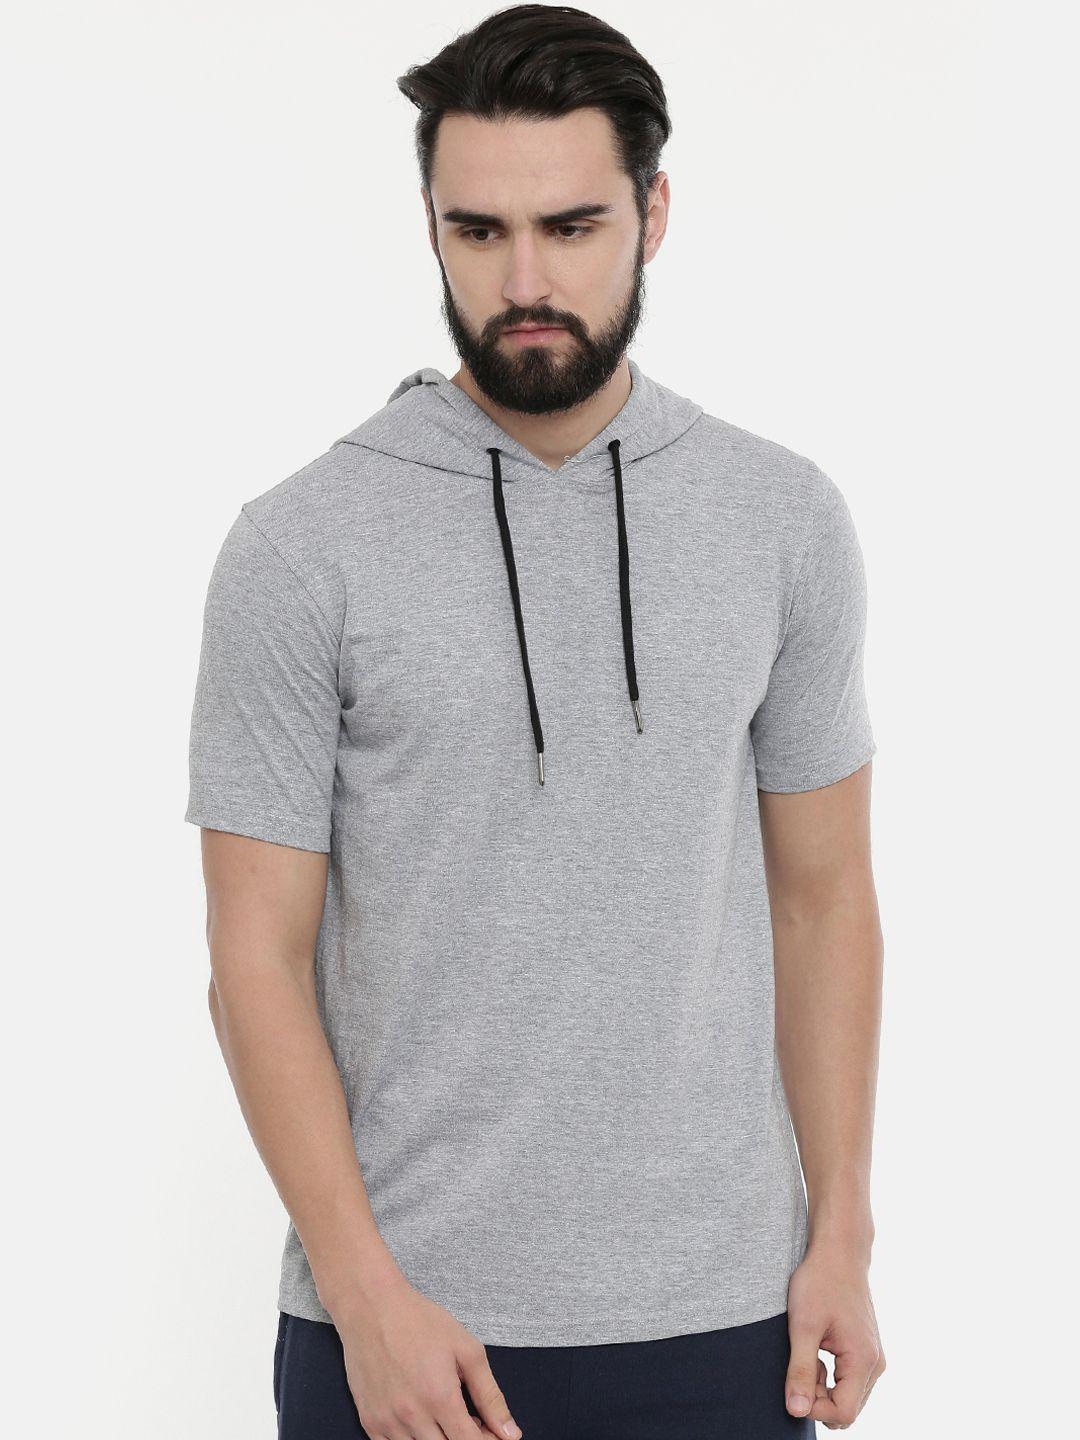 bushirt men grey melange solid hood t-shirt